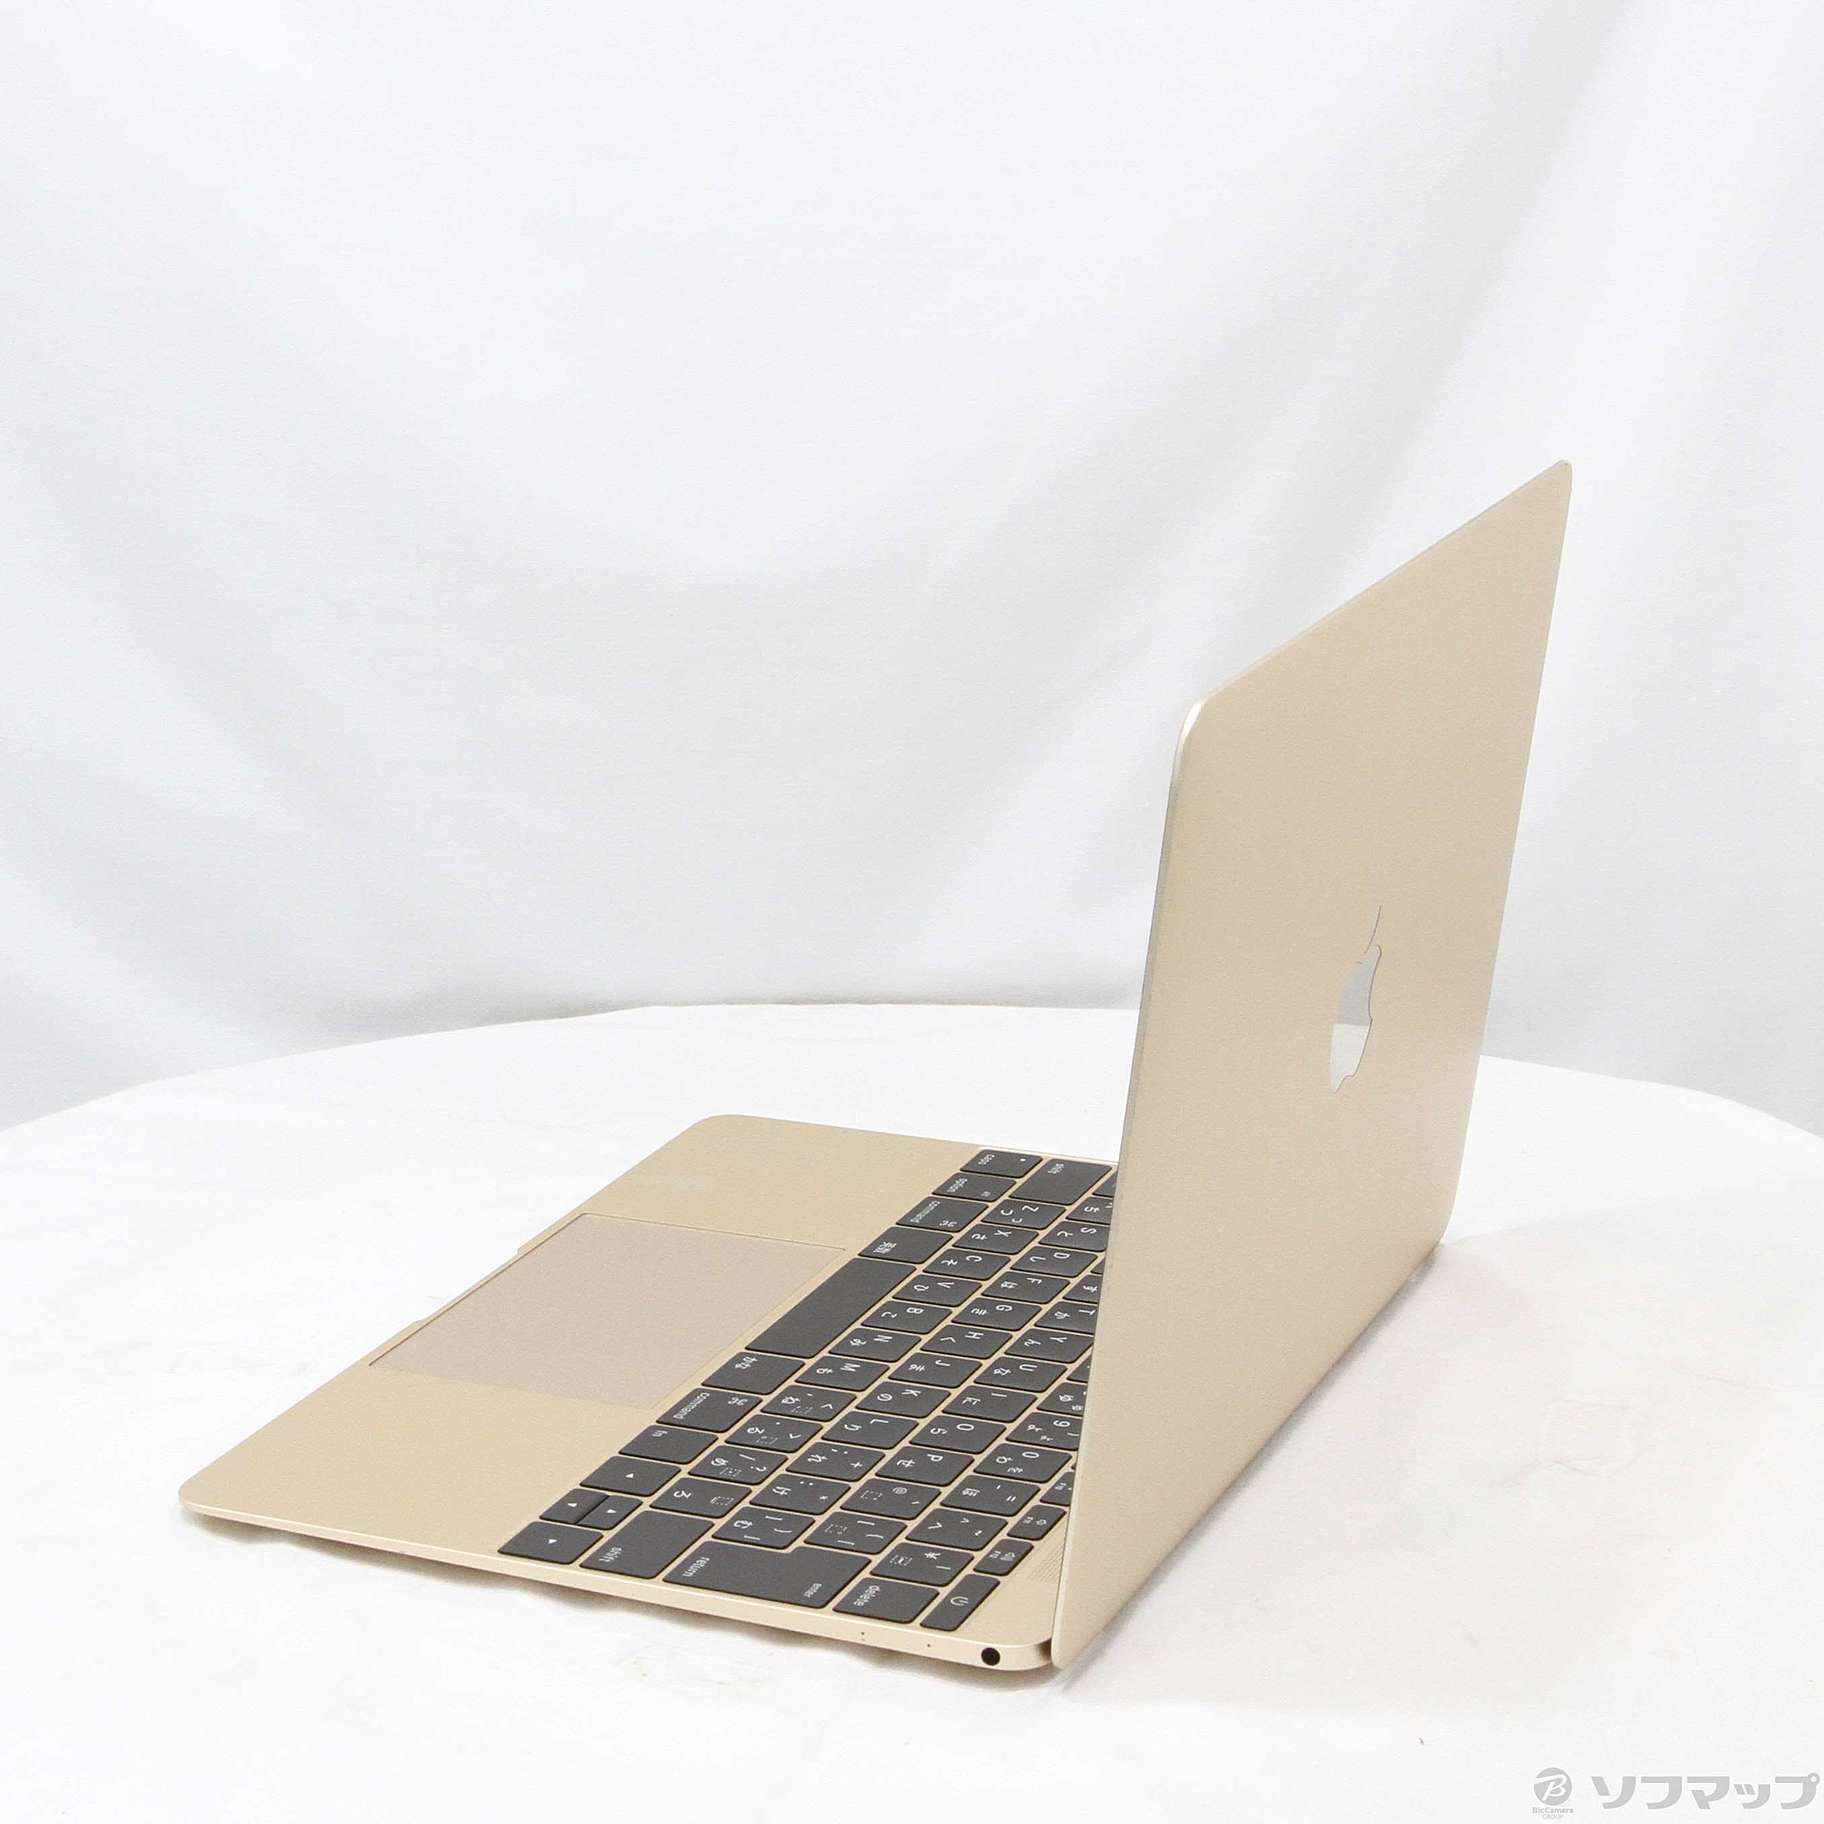 APPLE MacBook 2016 MACBOOK MLHE2J/A - fawema.org